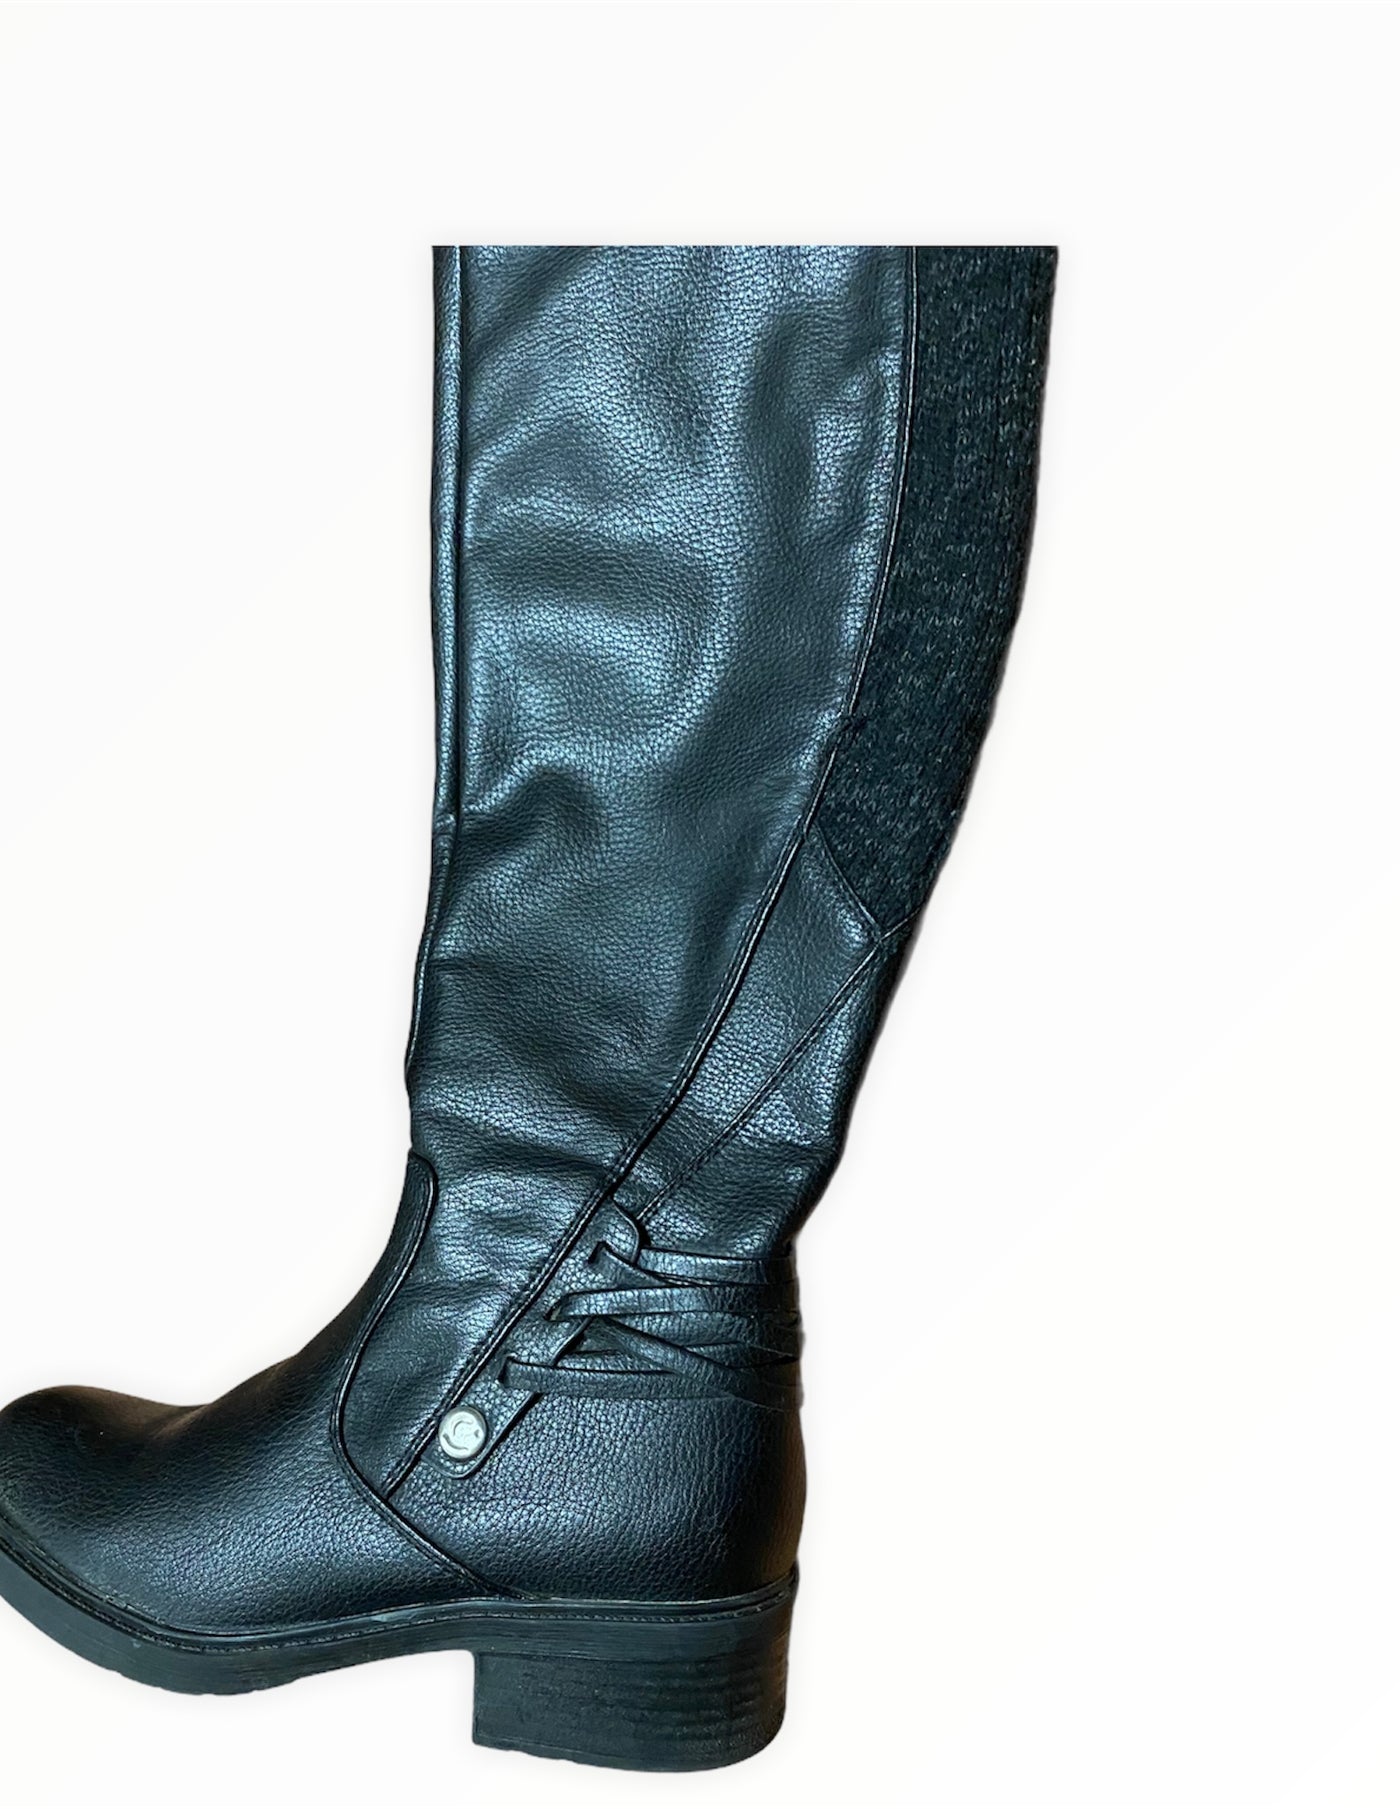 Black Beartrap Riding Boots - Size 5.5